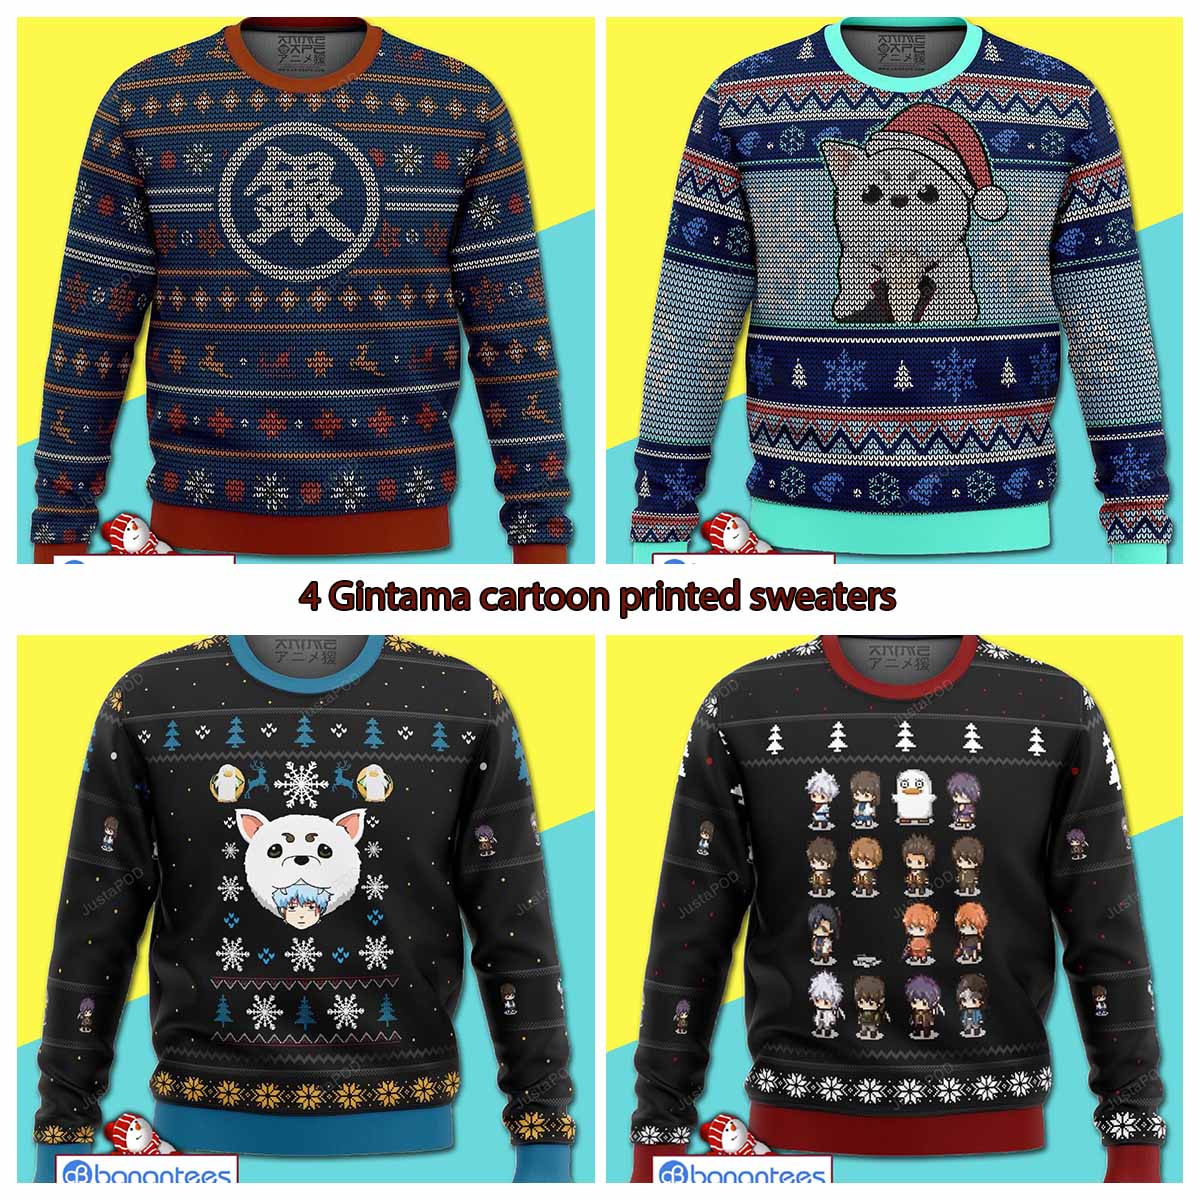 4 Gintama cartoon printed sweaters